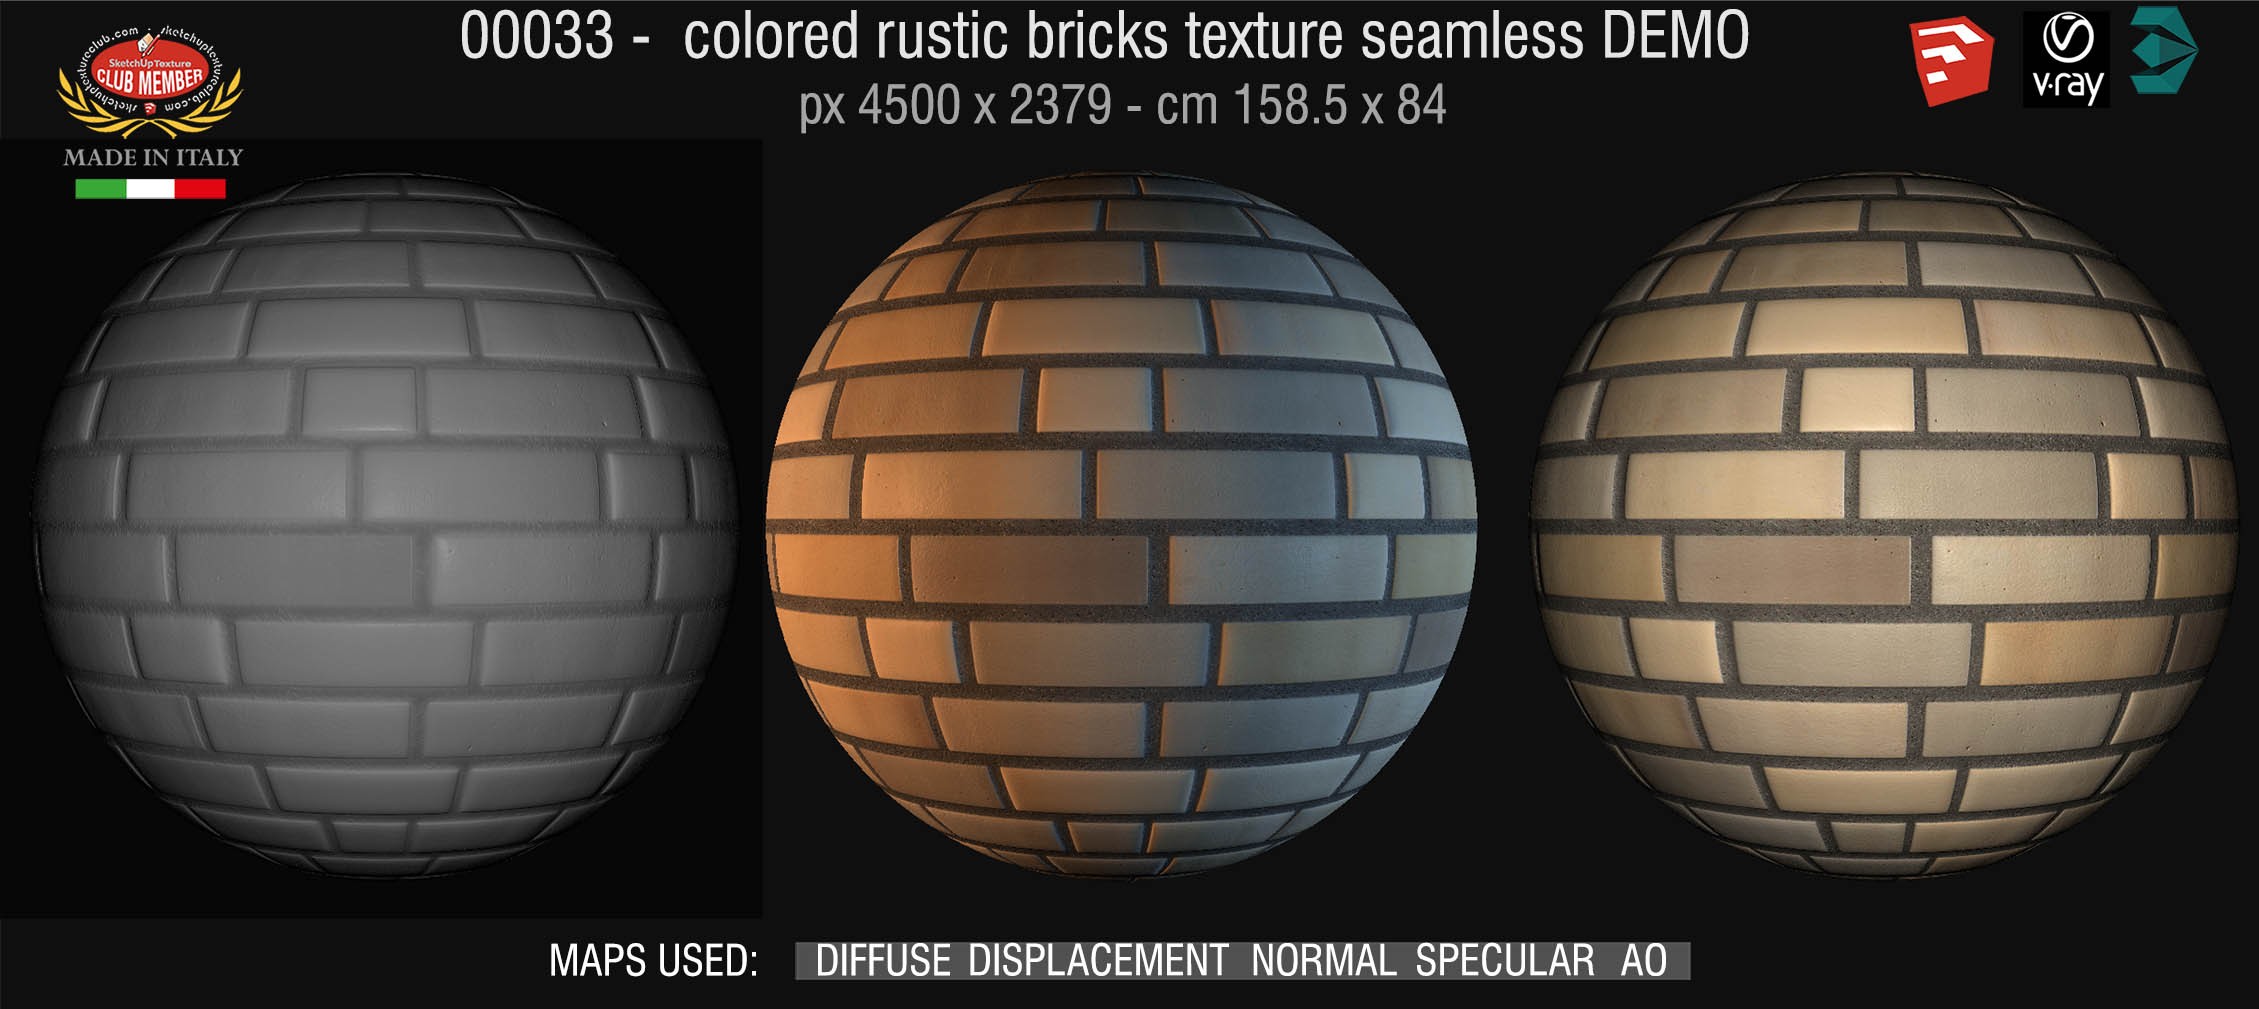 00033 colored rustic bricks texture seamless + maps DEMO